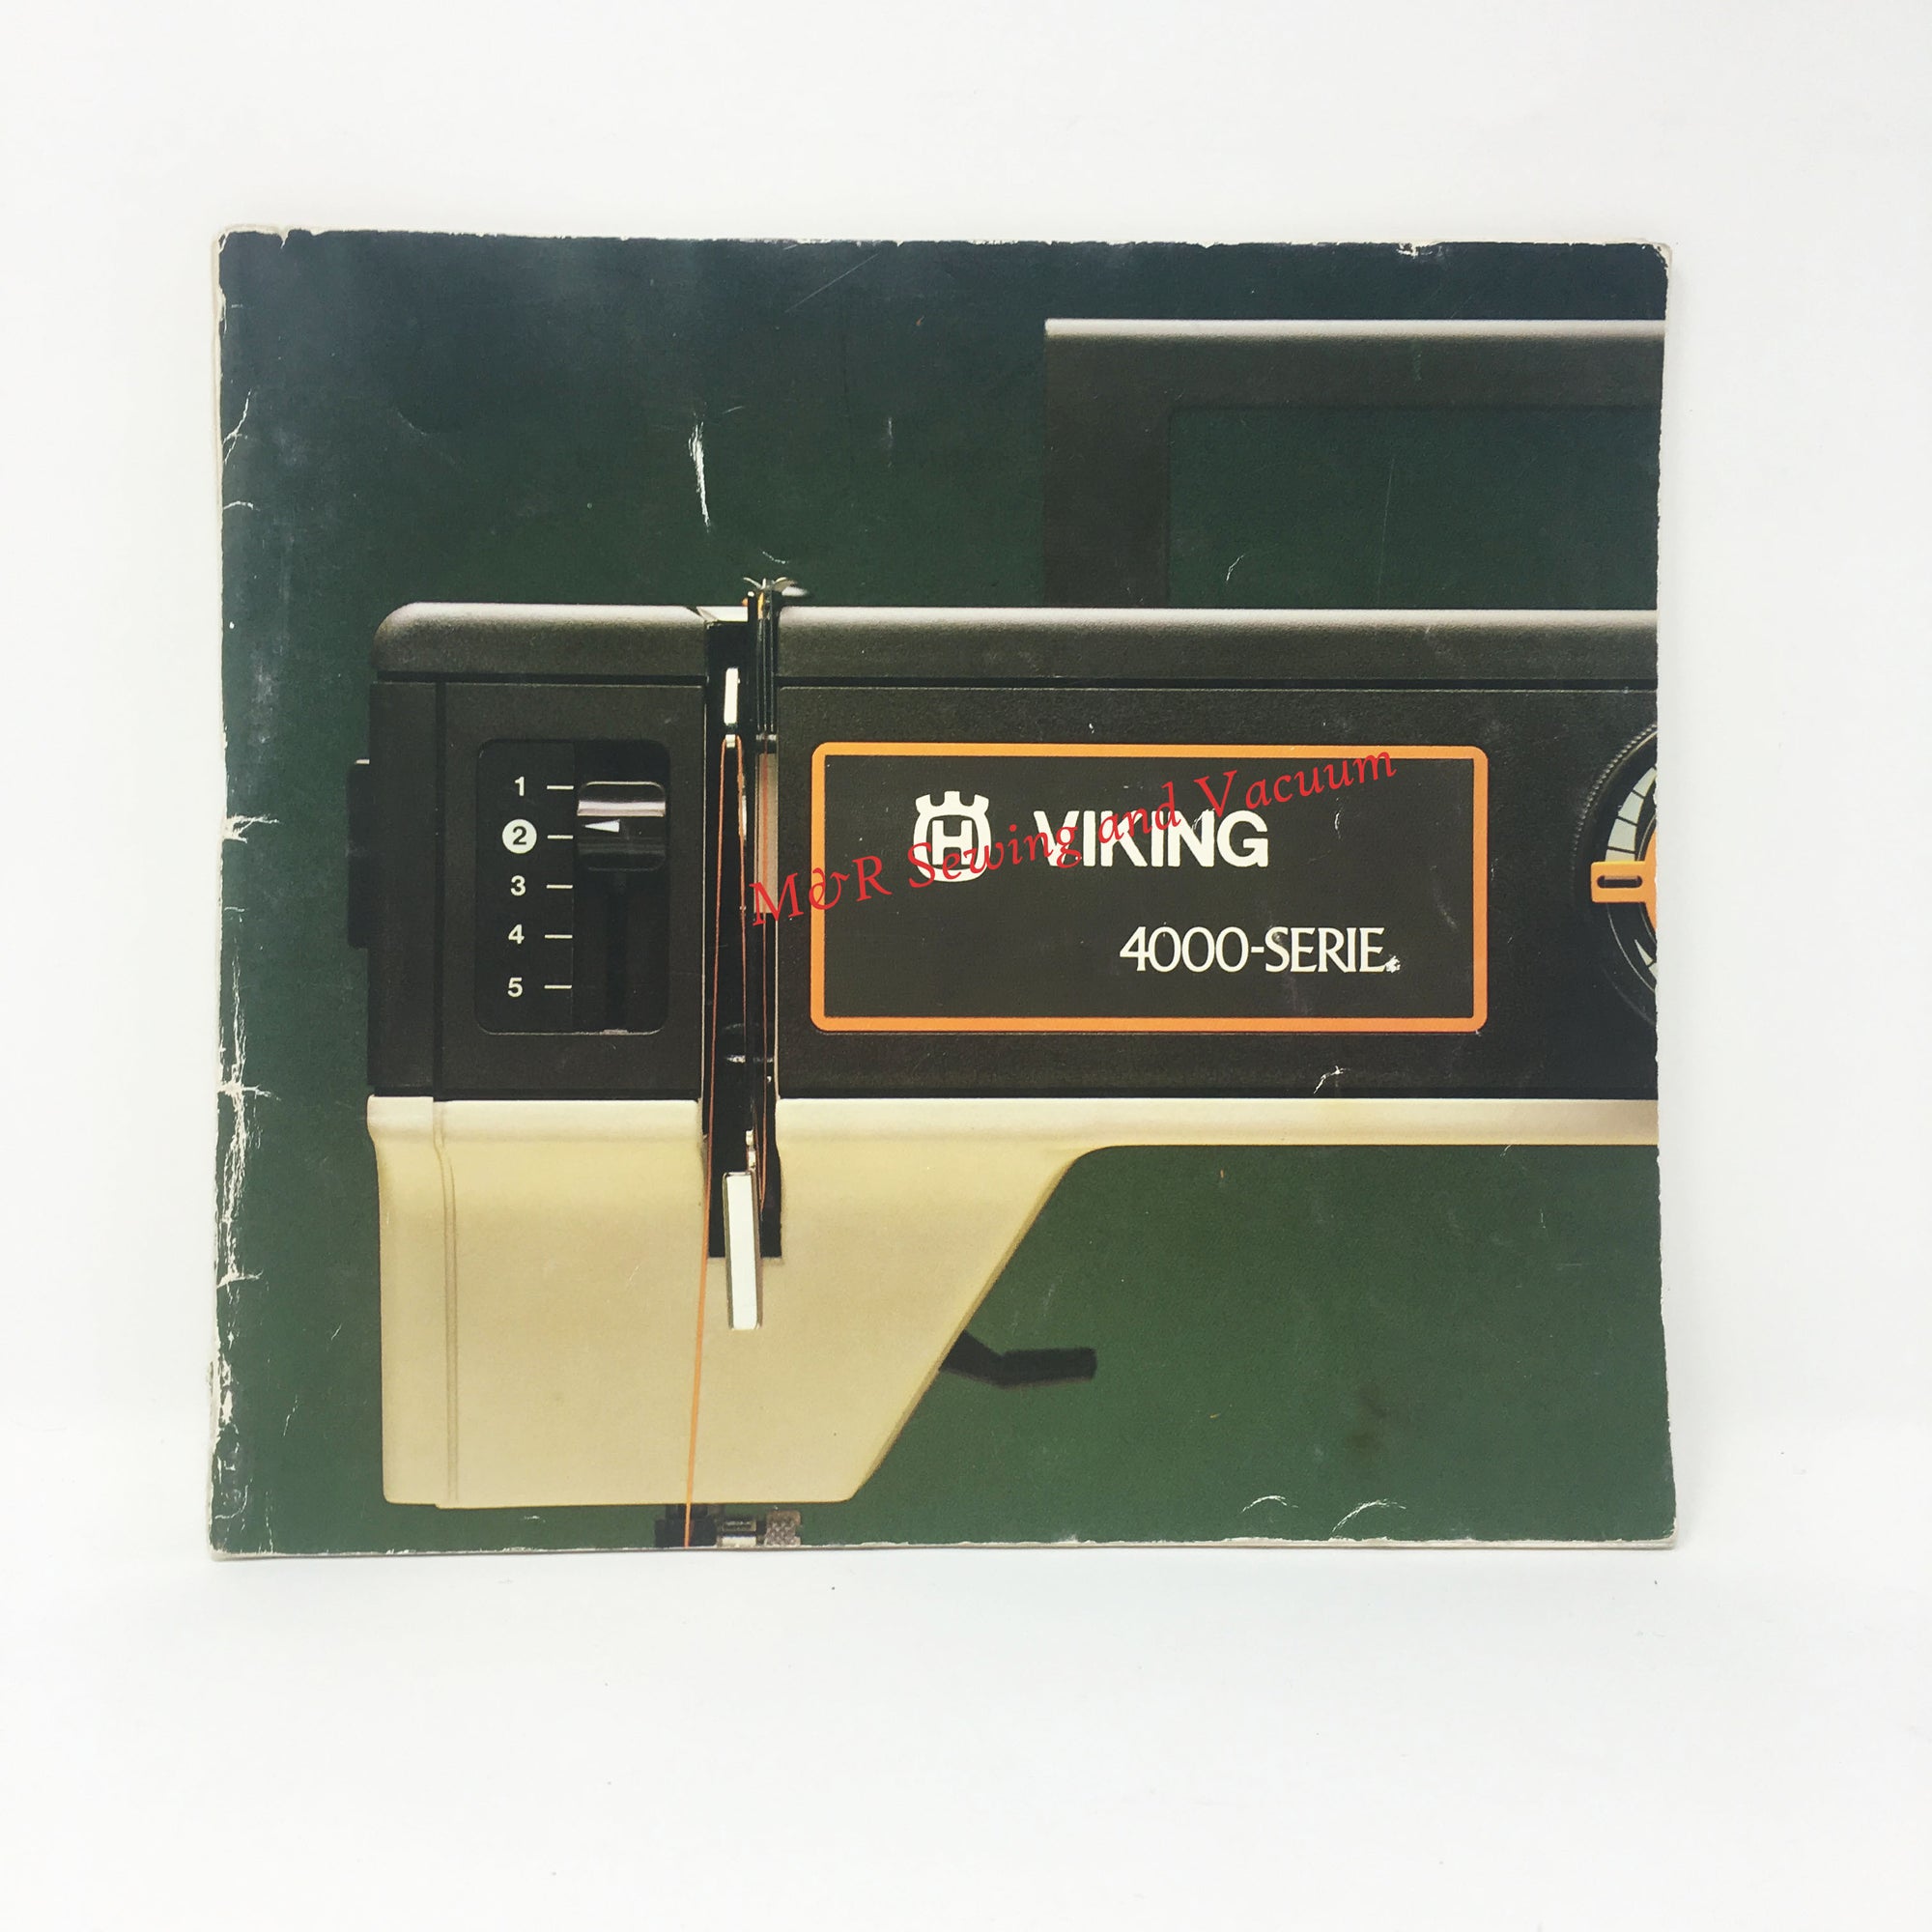 USED Viking 4000 Manual